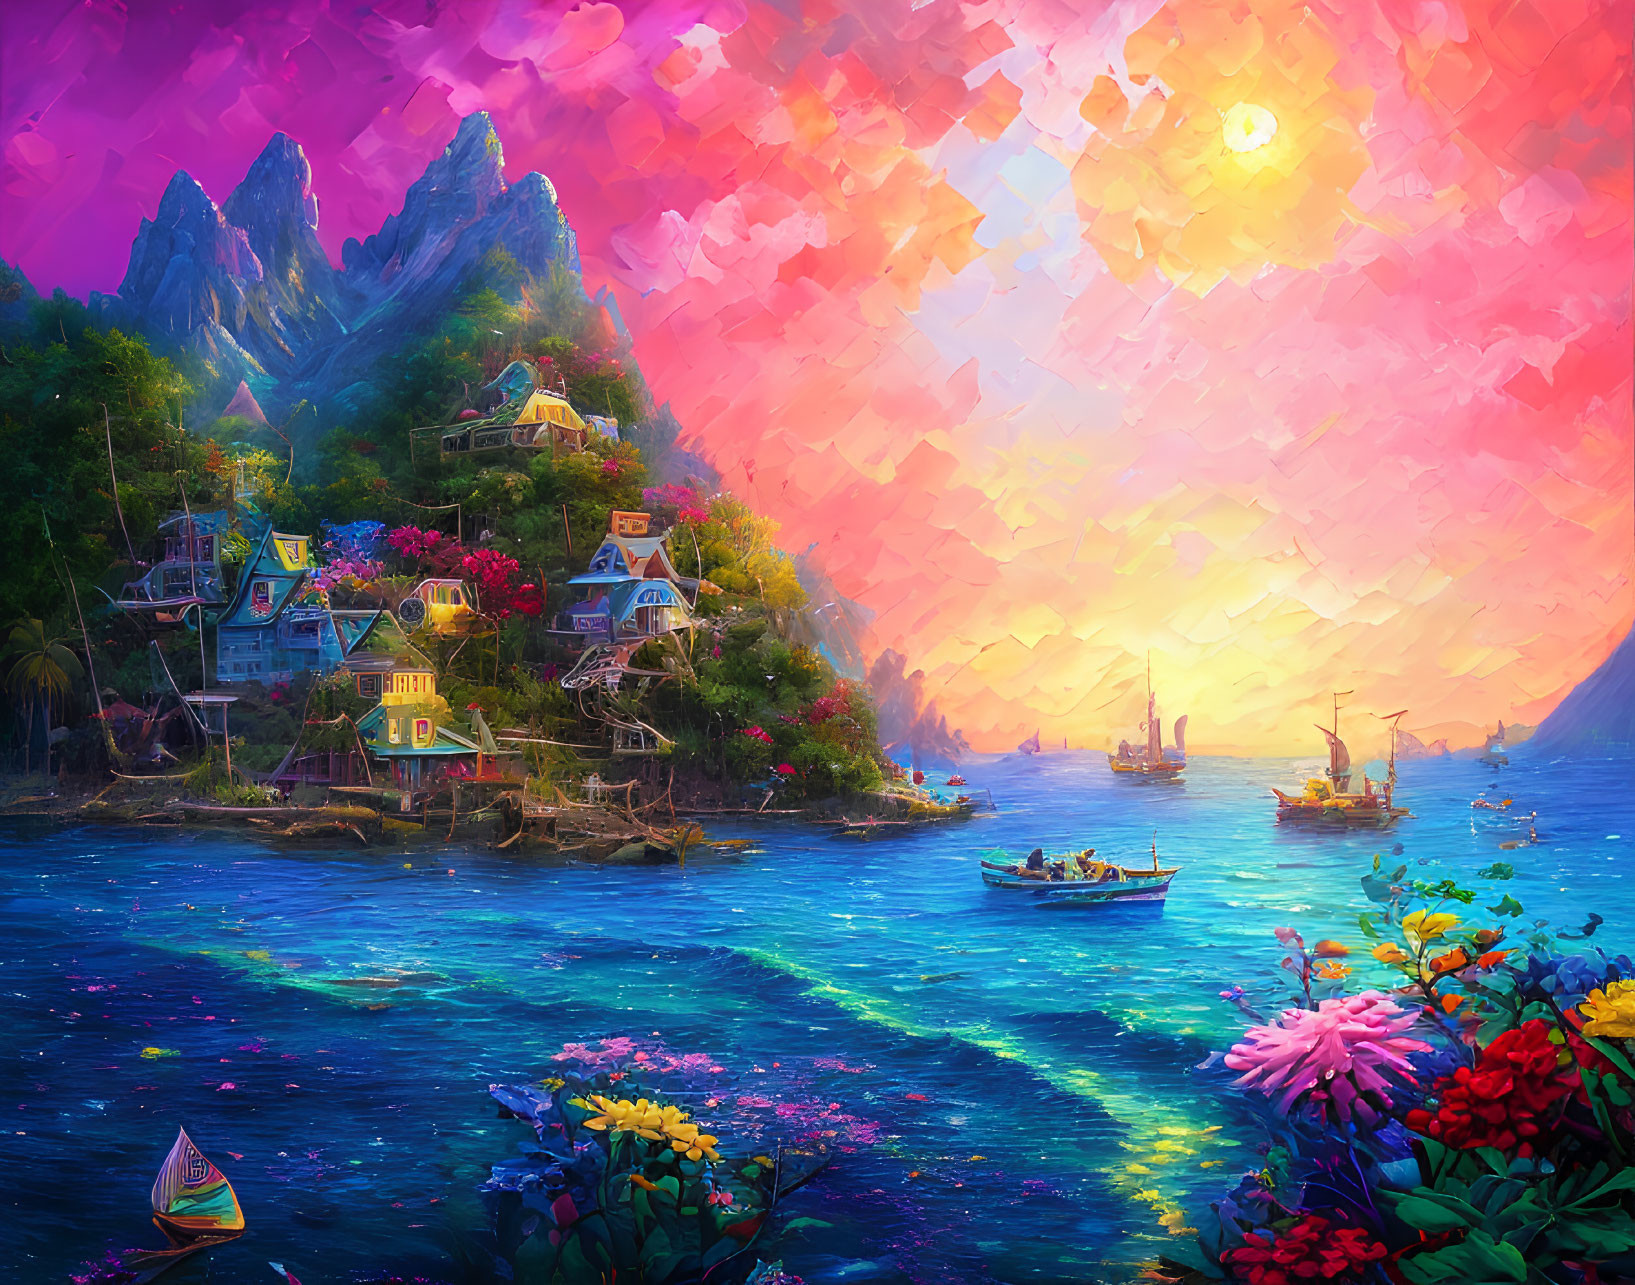 Colorful Seaside Village Landscape with Sunset Sky